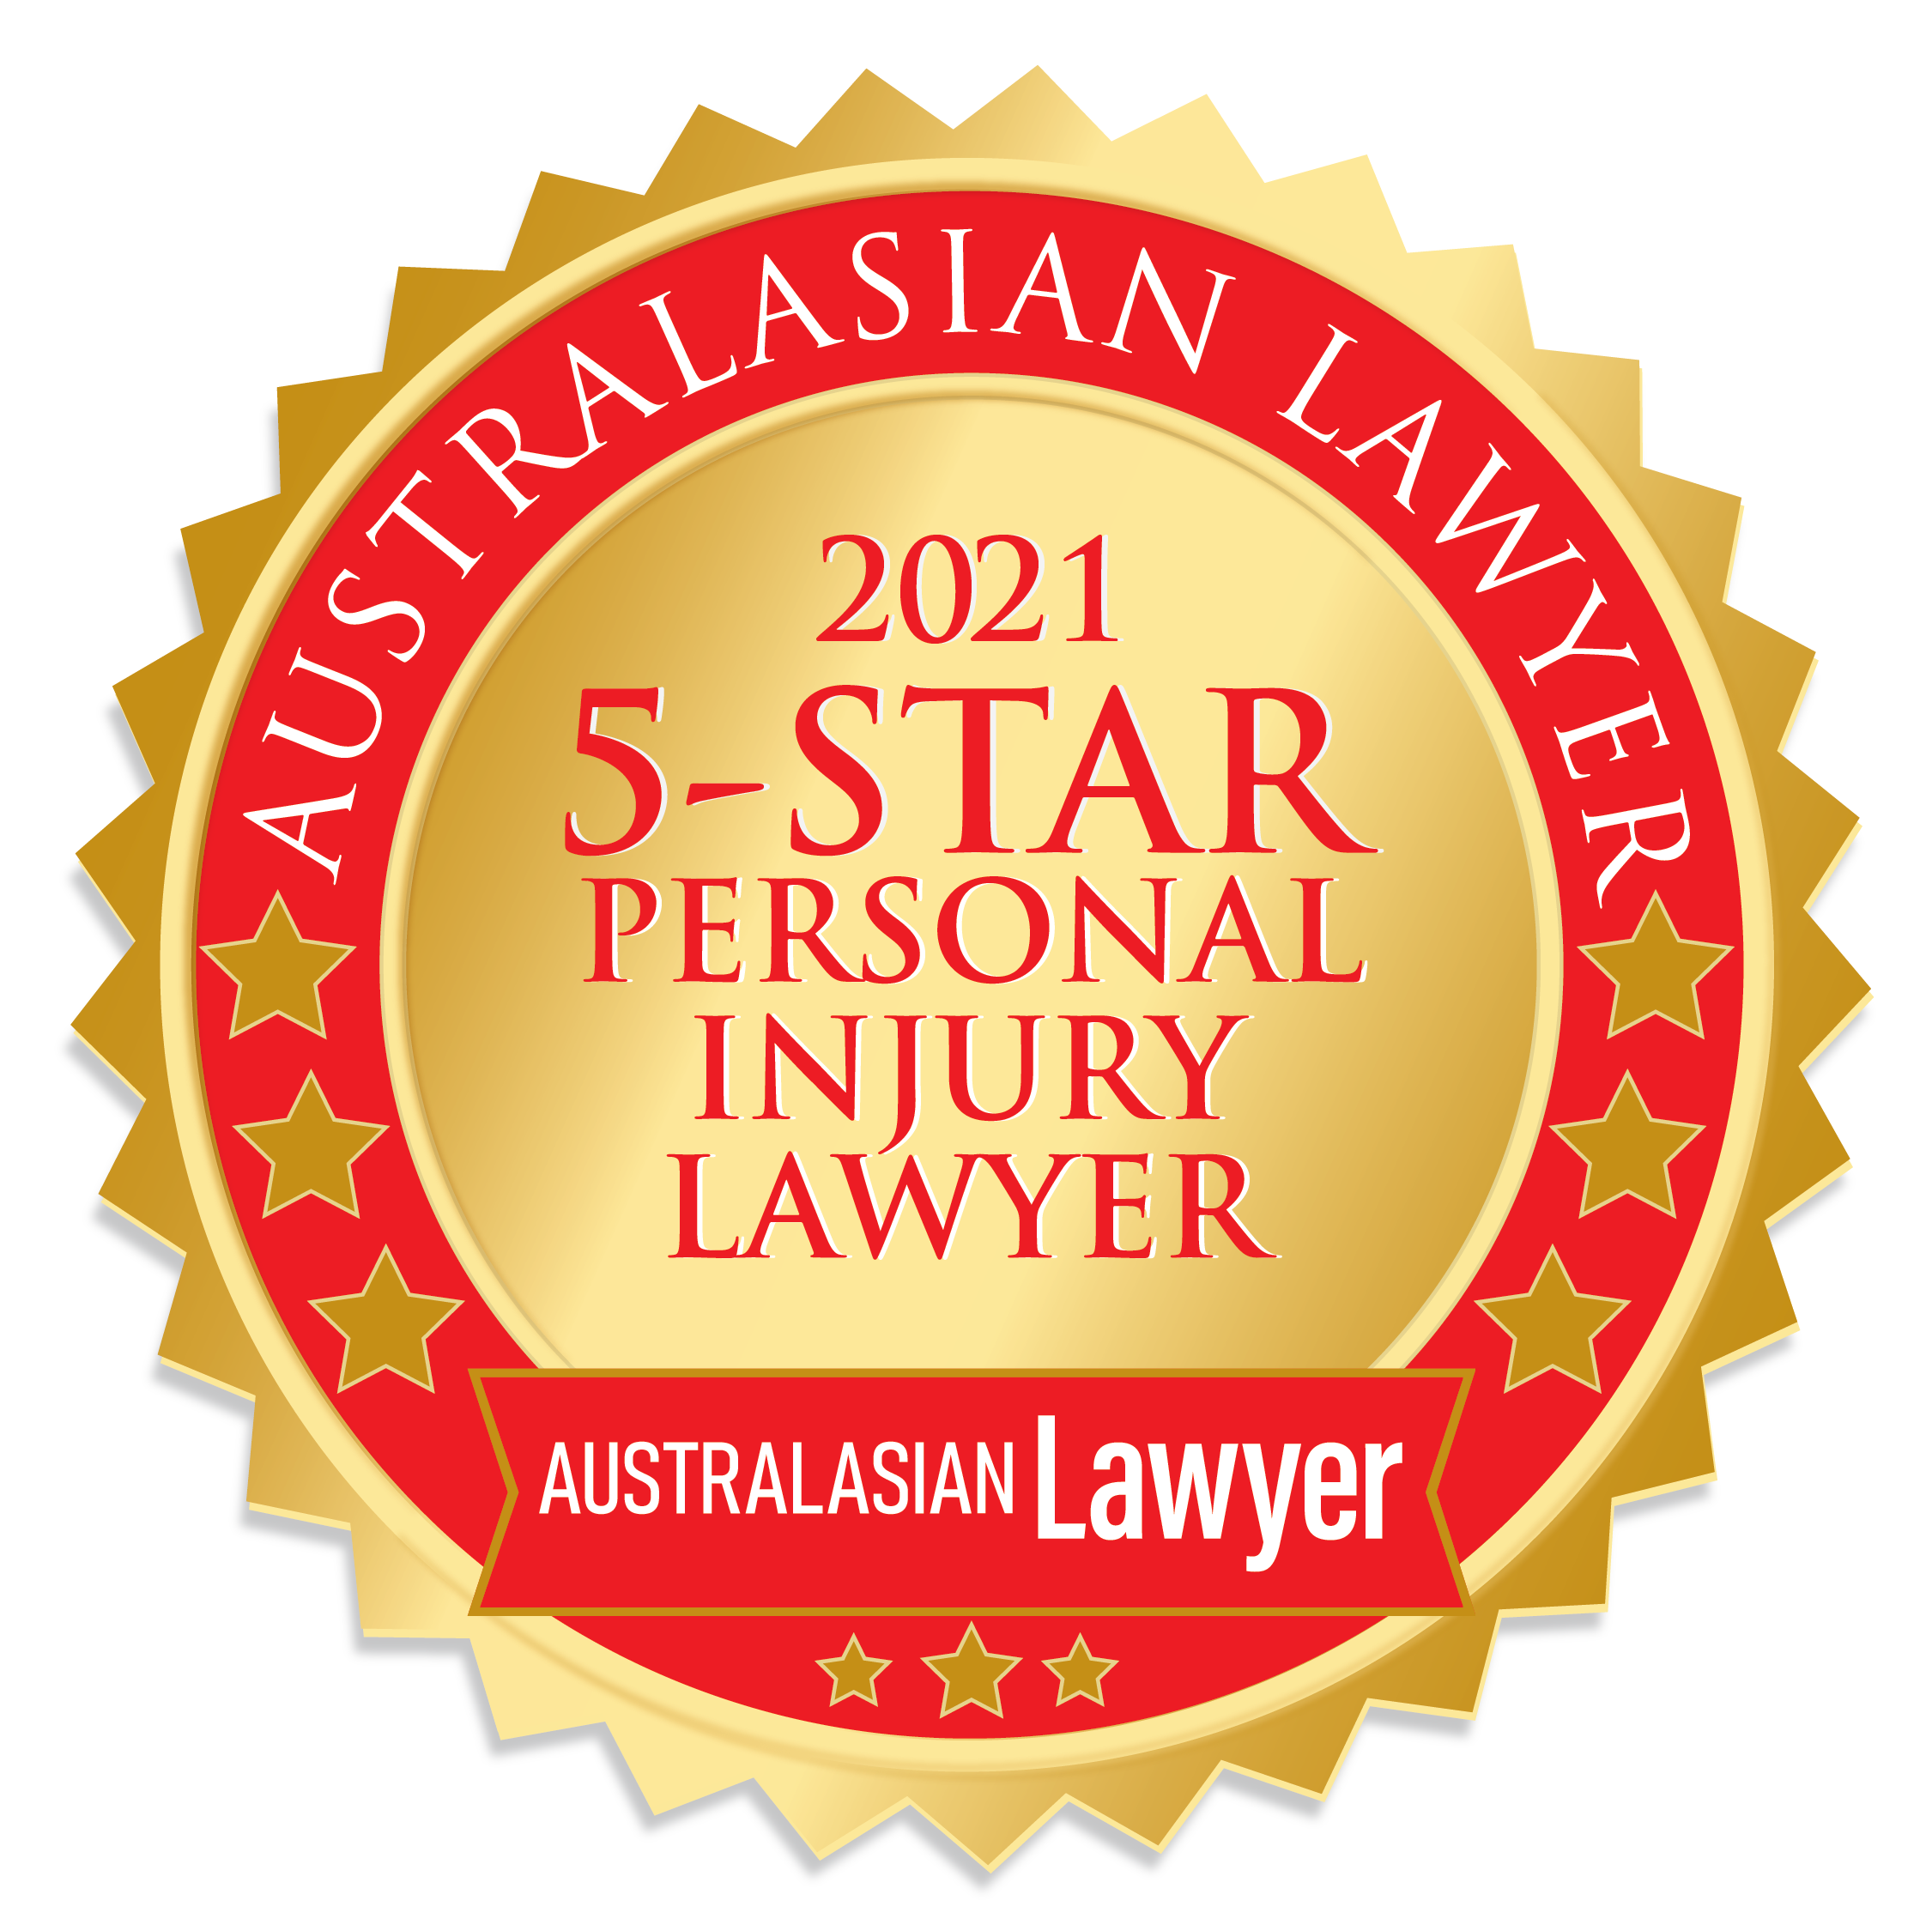 Australasian Lawyer Award - 2021 5-Star Personal Injury Lawyer